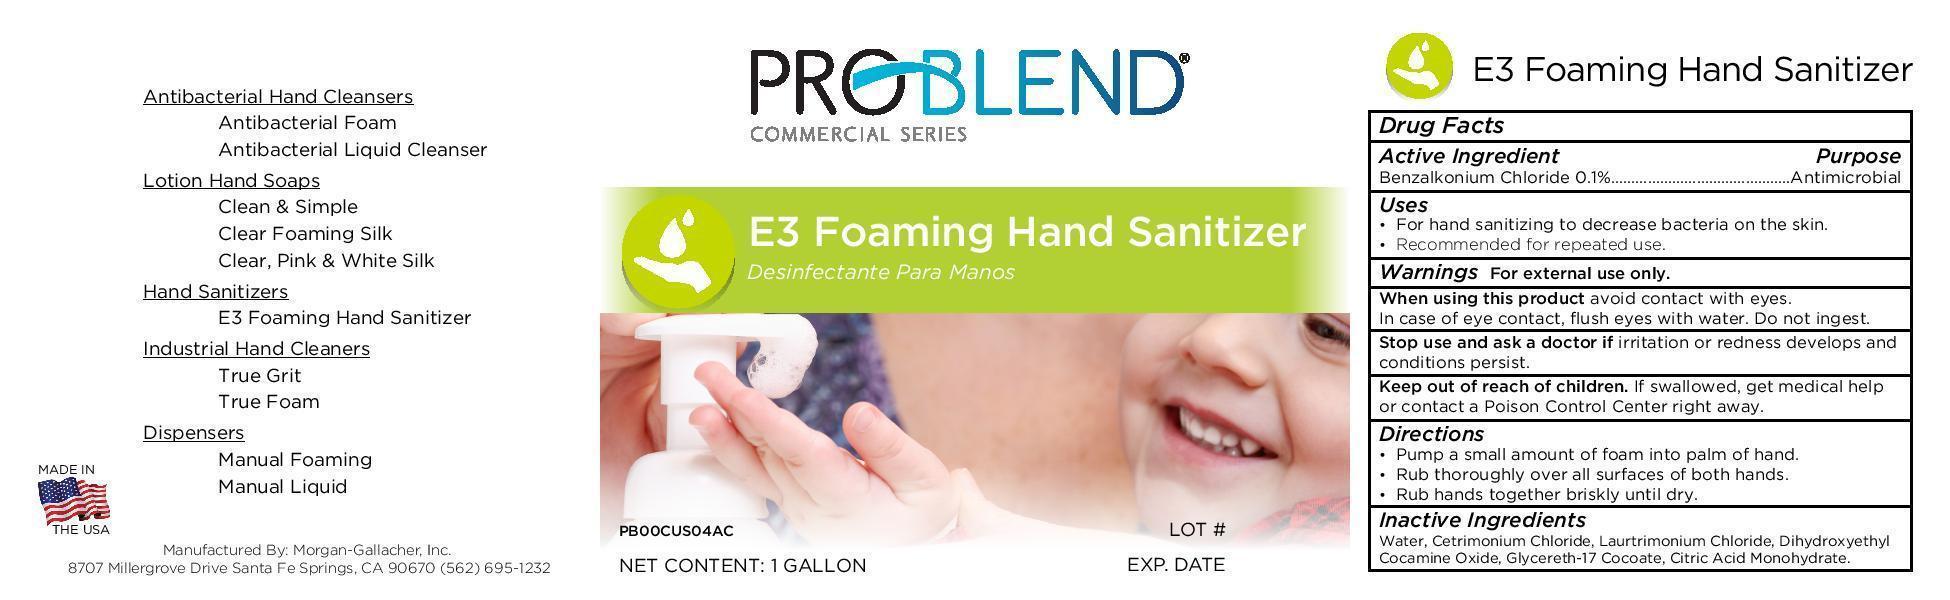 E3 Foaming Hand Sanitizer